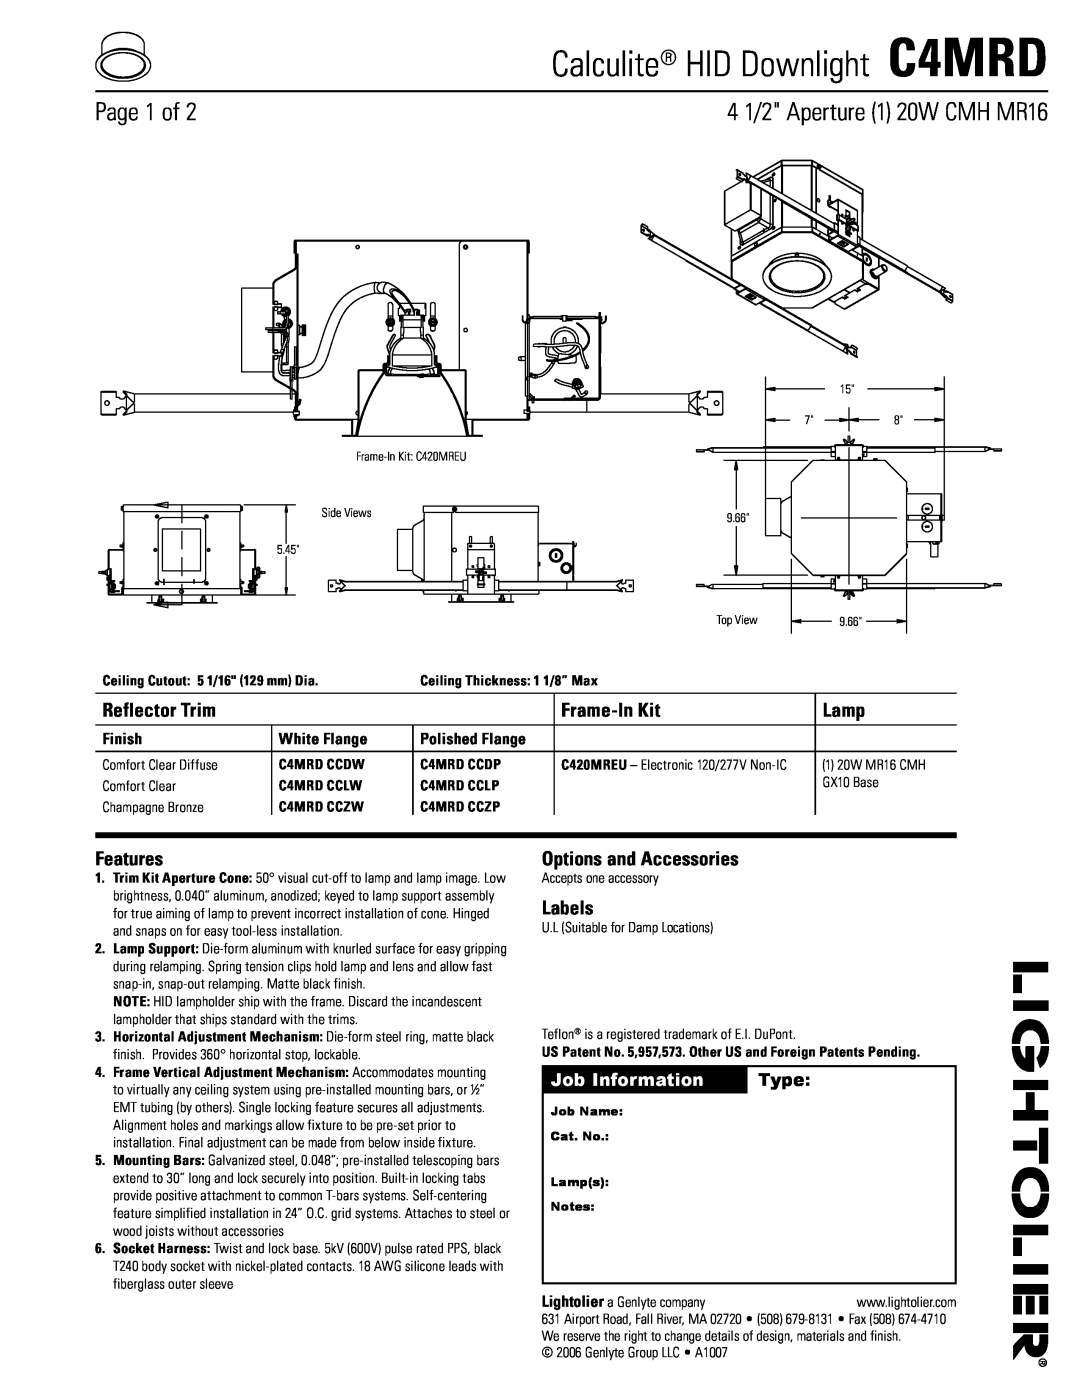 Lightolier C4MRD HID manual Calculite HID Downlight C4MRD, Page of, 4 1/2 Aperture 1 20W CMH MR16, Job Information, Type 